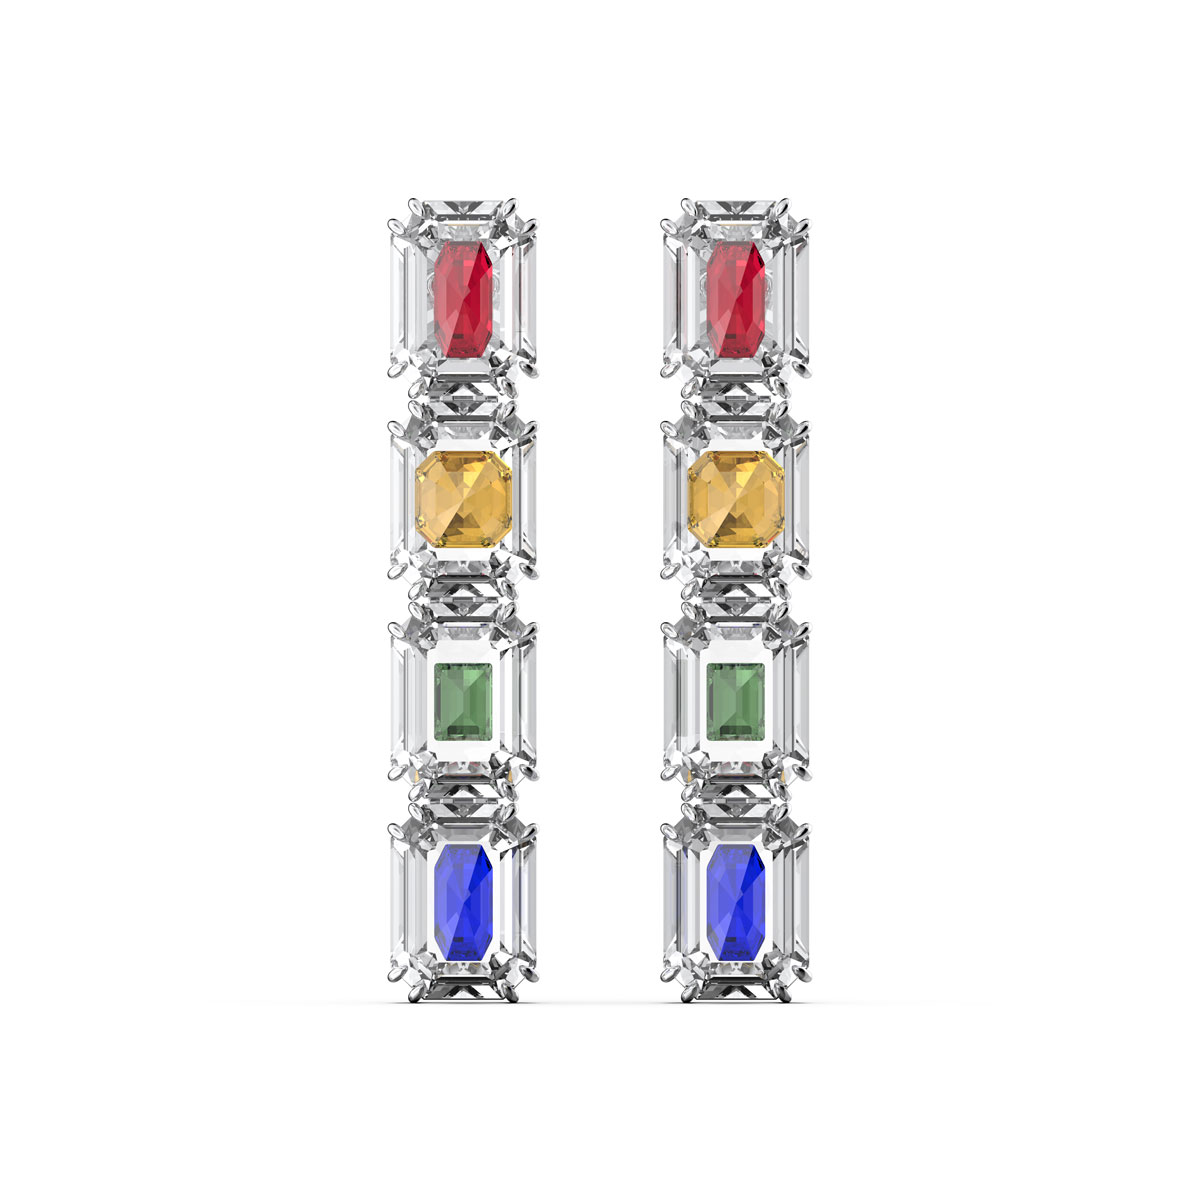 Swarovski Chroma Drop Earrings, Oversized Crystals, Multicolored, Rhodium Plated, Pair